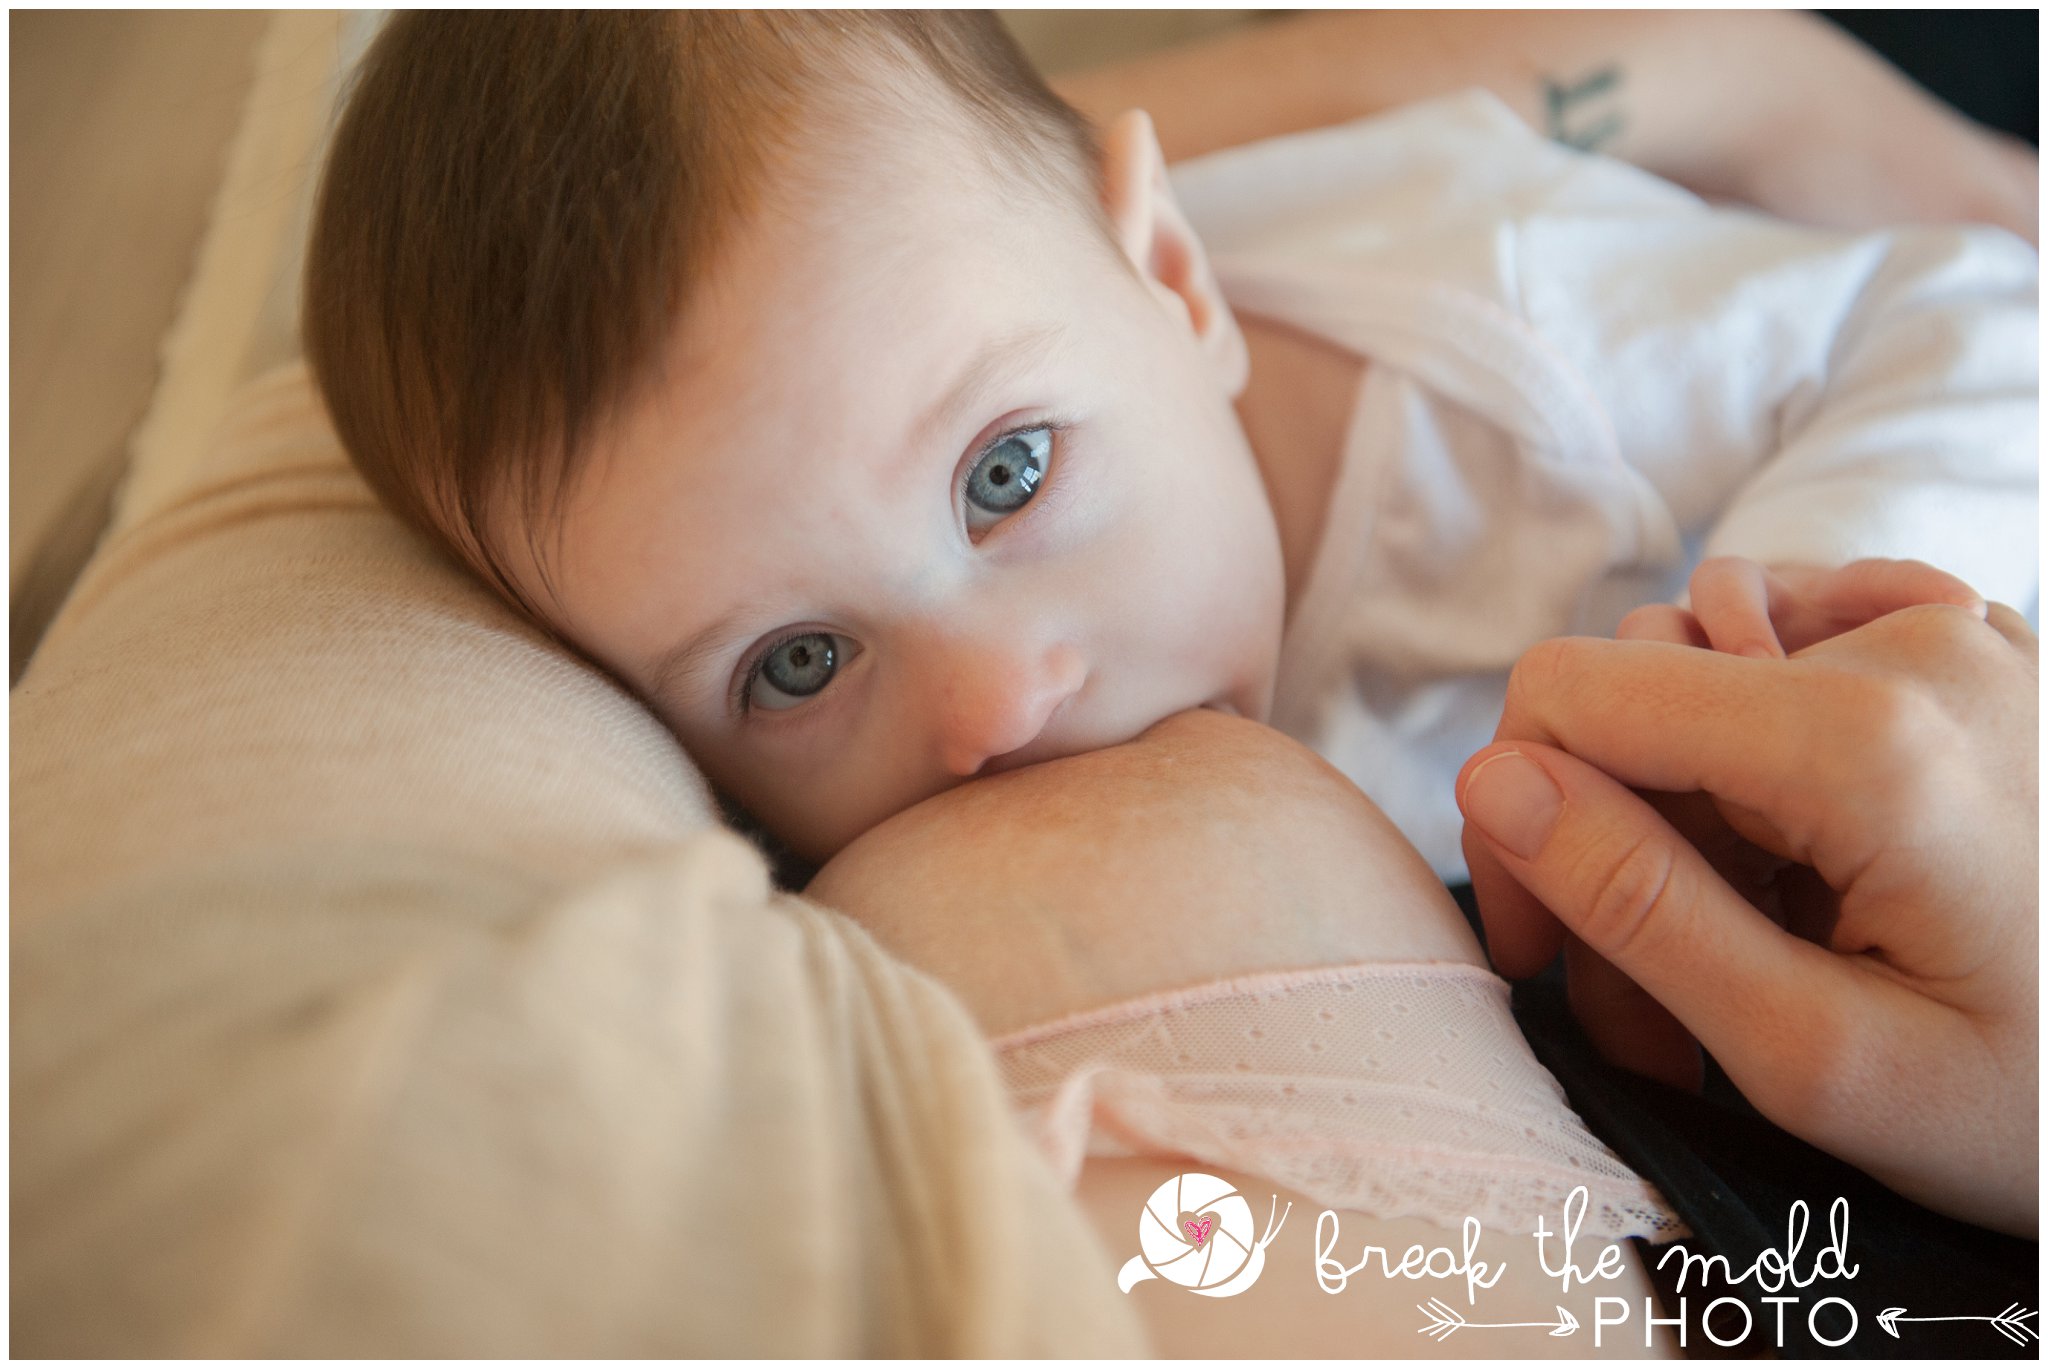 break-the-mold-photo-nursing-body-love-baby-pregnant-women-powerful-breastfeeding-sessions_7200.jpg